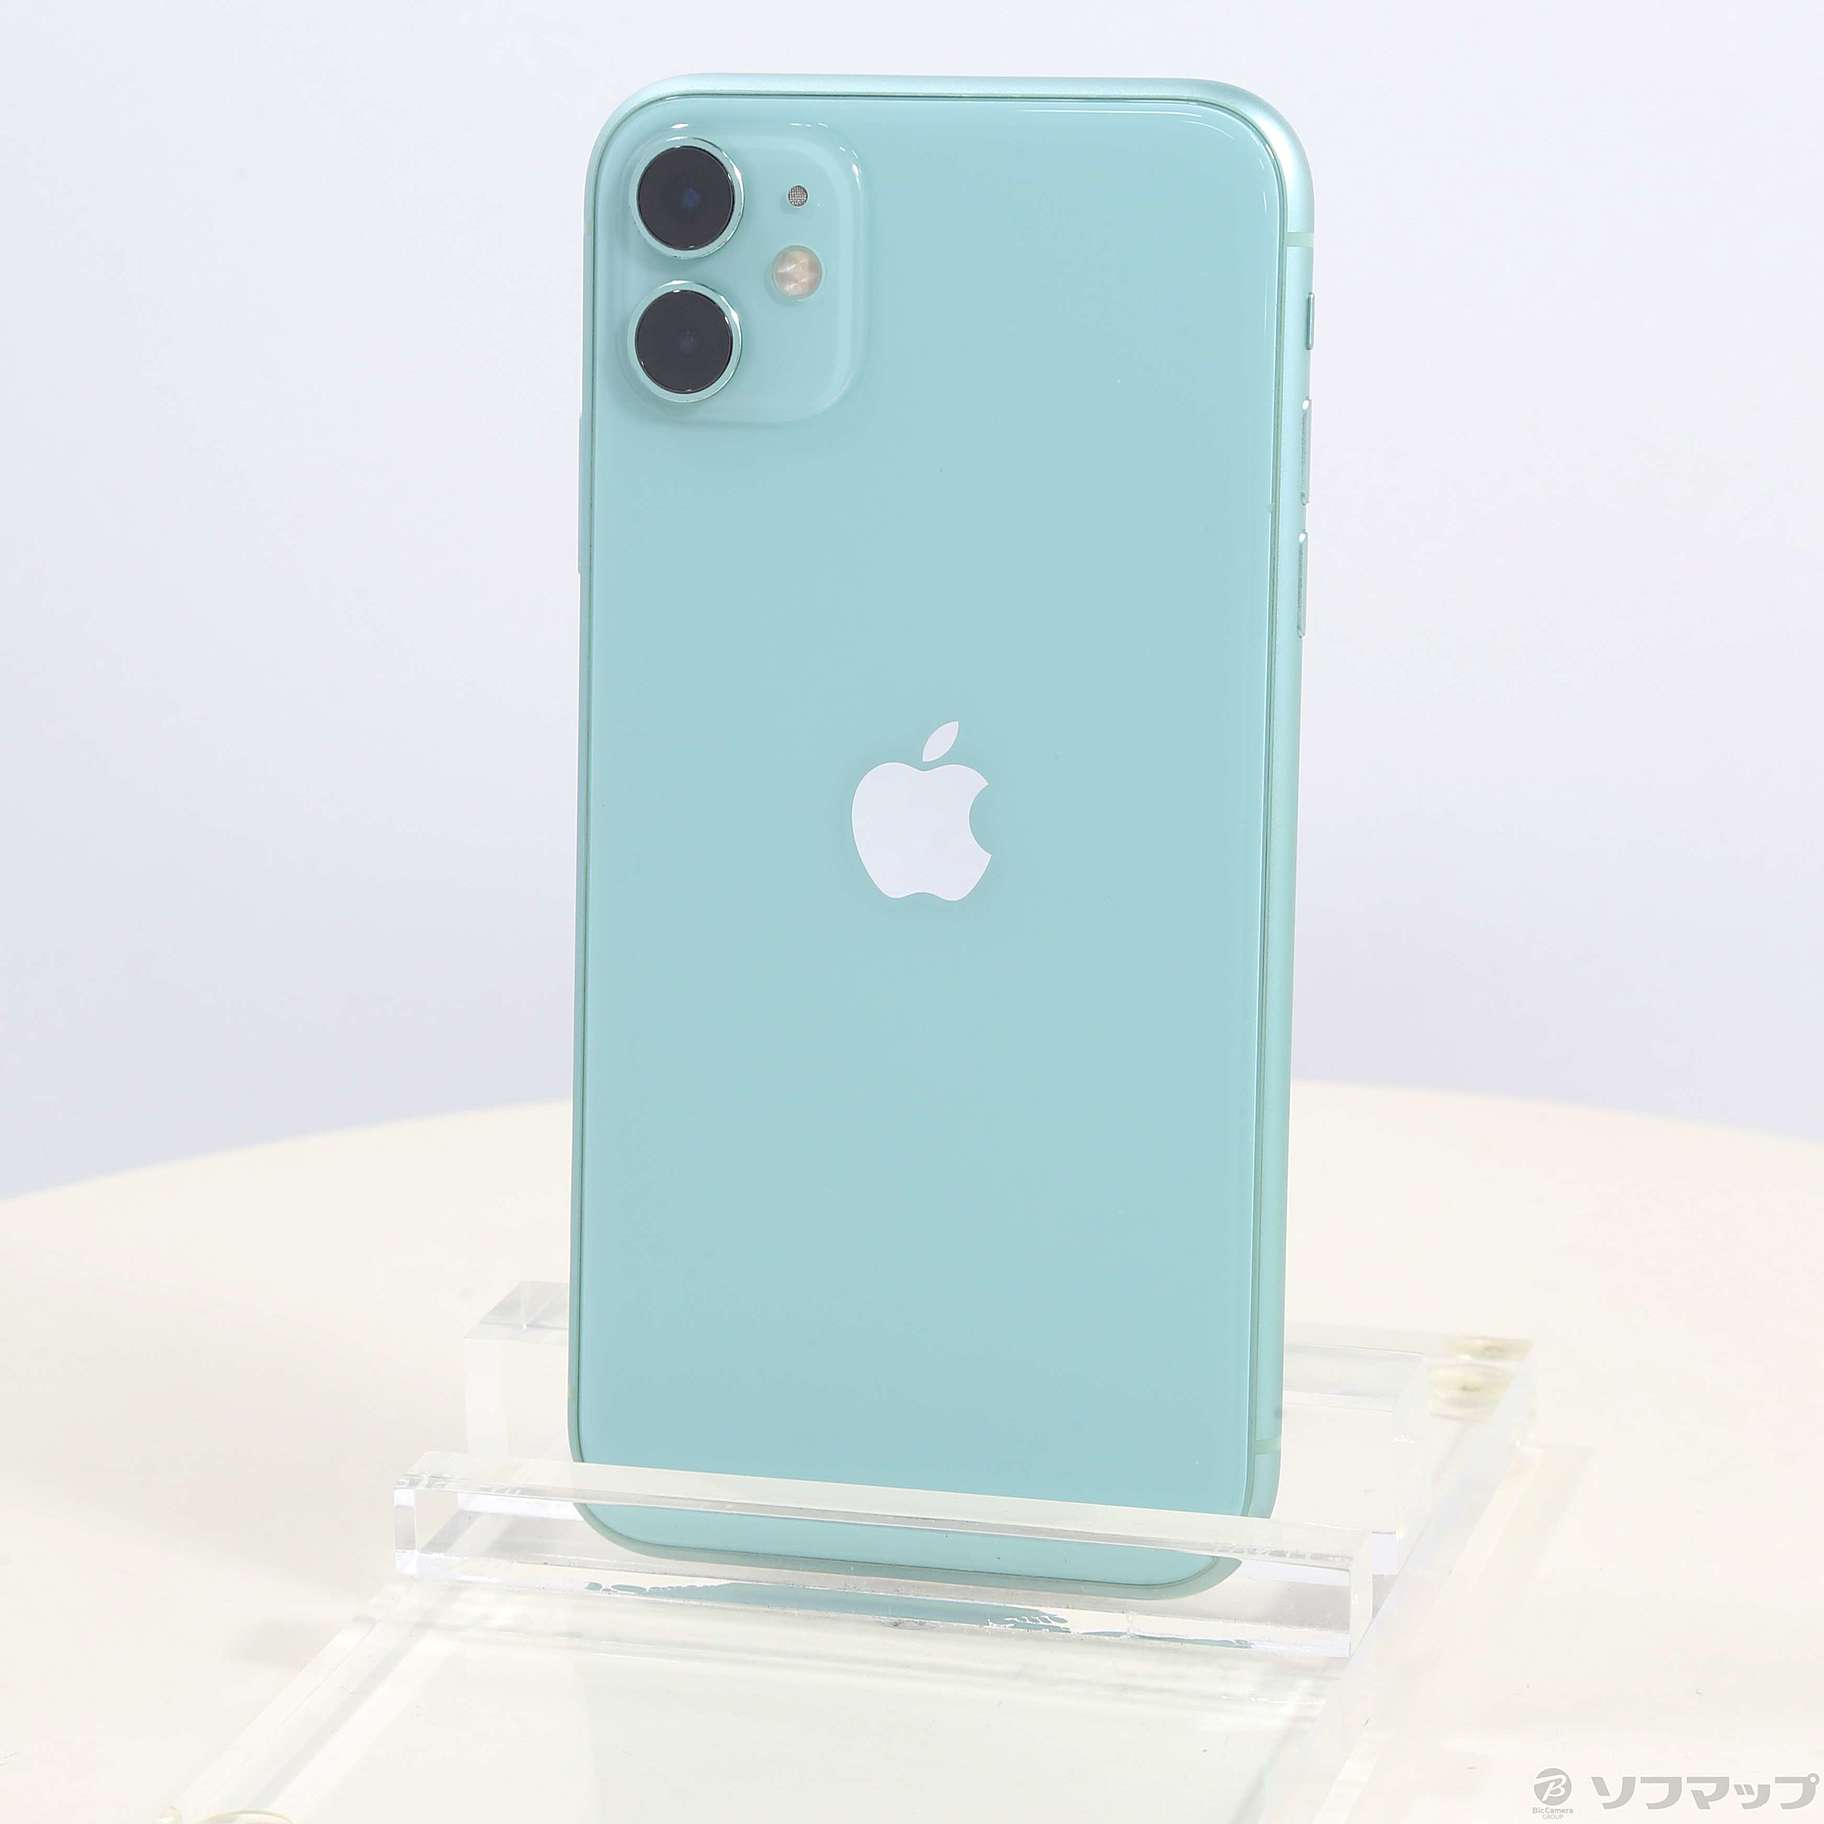 ◇【Apple アップル】iPhone 11 128GB SIMフリー MWM62J/A